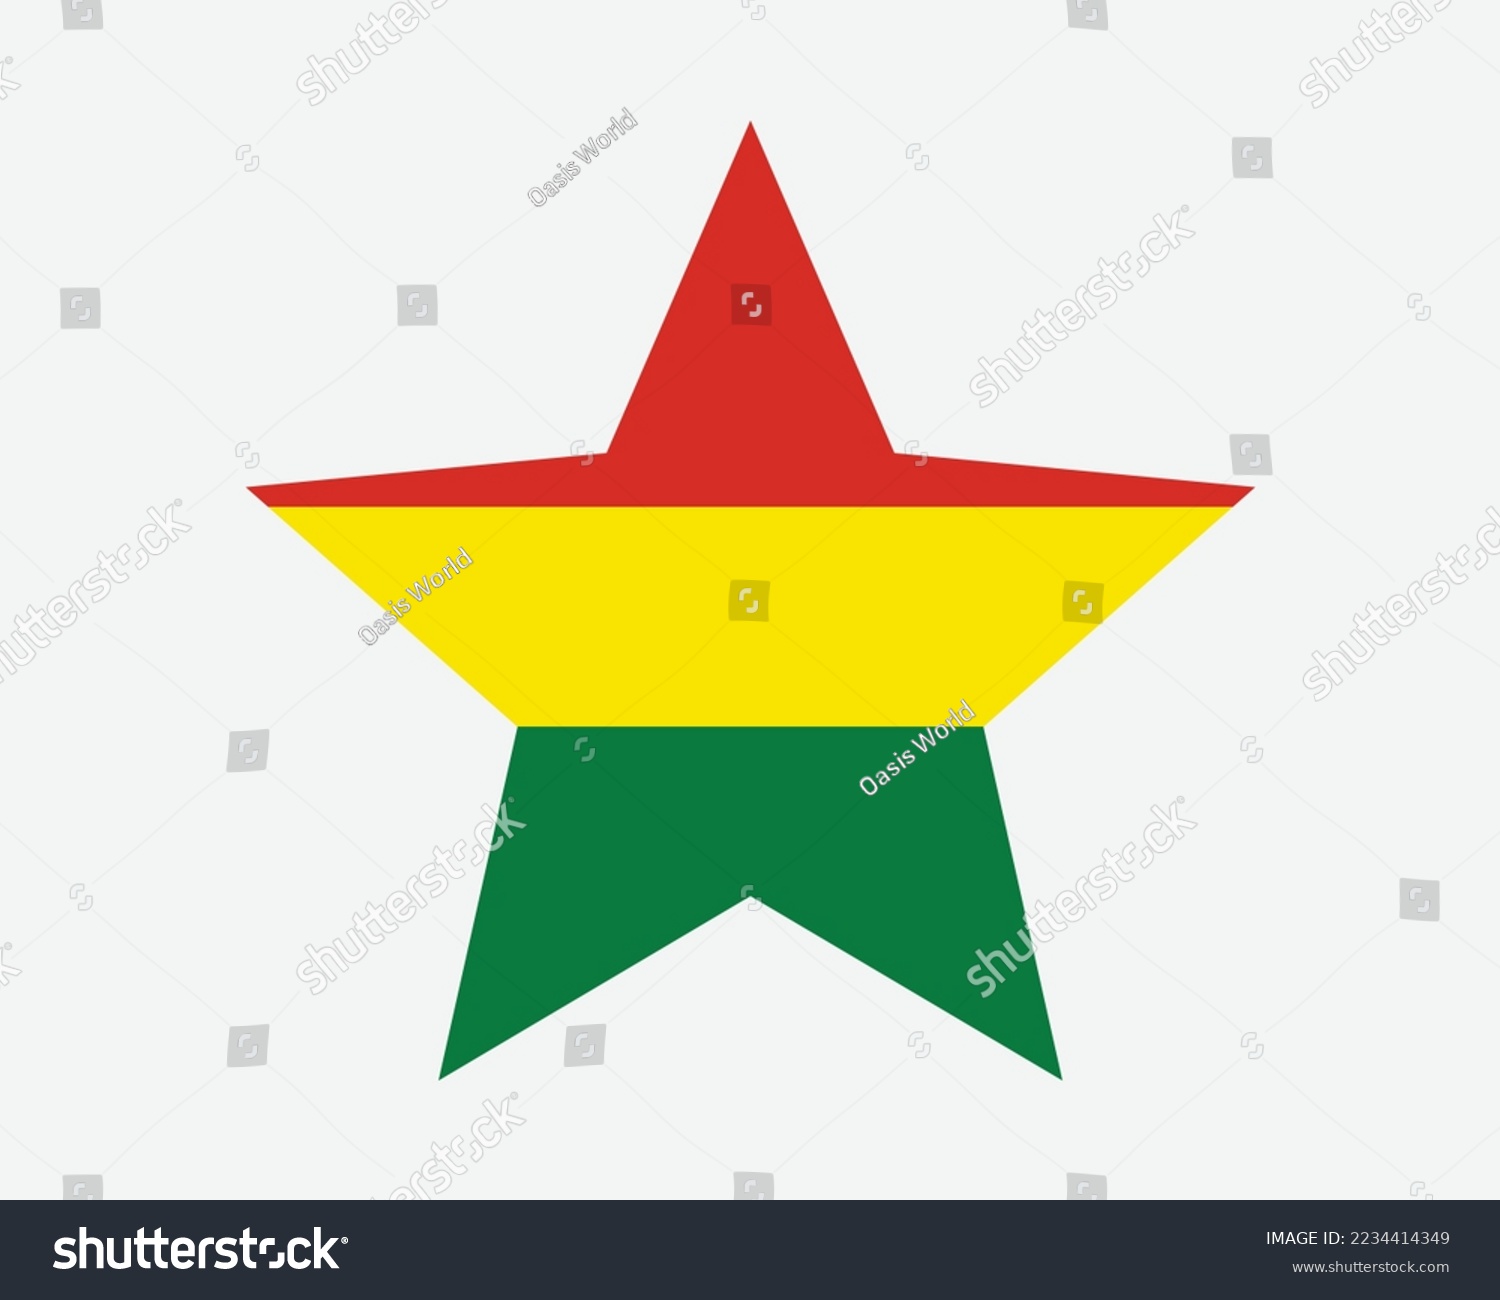 SVG of Bolivia Star Flag. Bolivian Star Shape Flag. Country National Banner Icon Symbol Vector 2D Flat Artwork Graphic Illustration svg